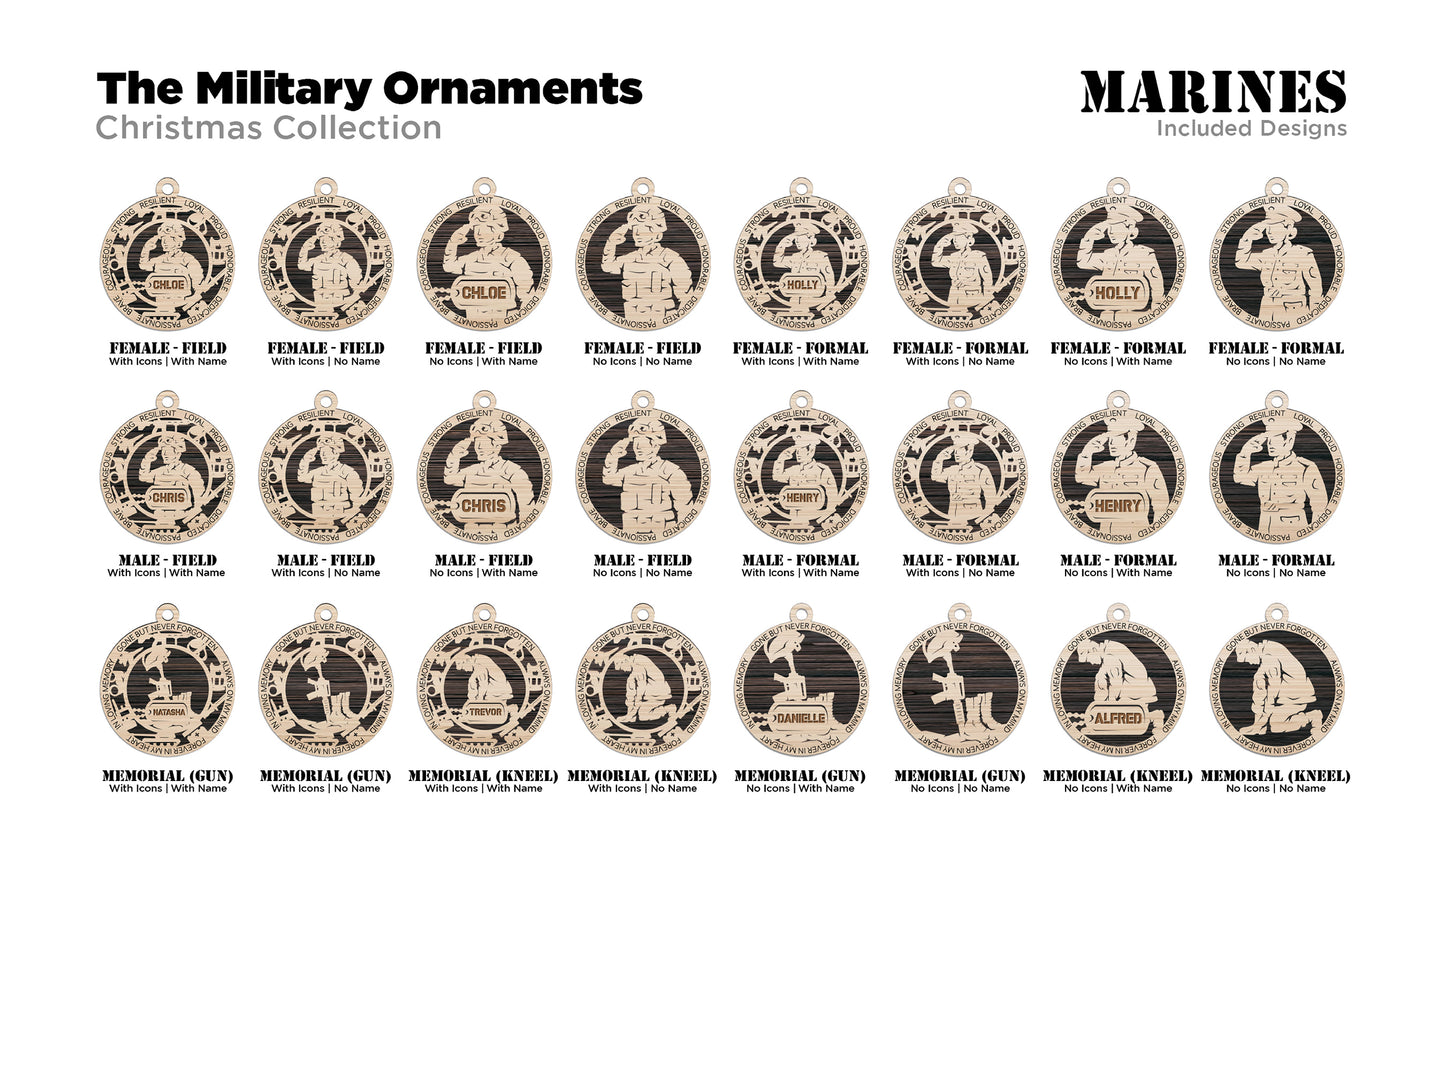 Marine Corp style ornaments